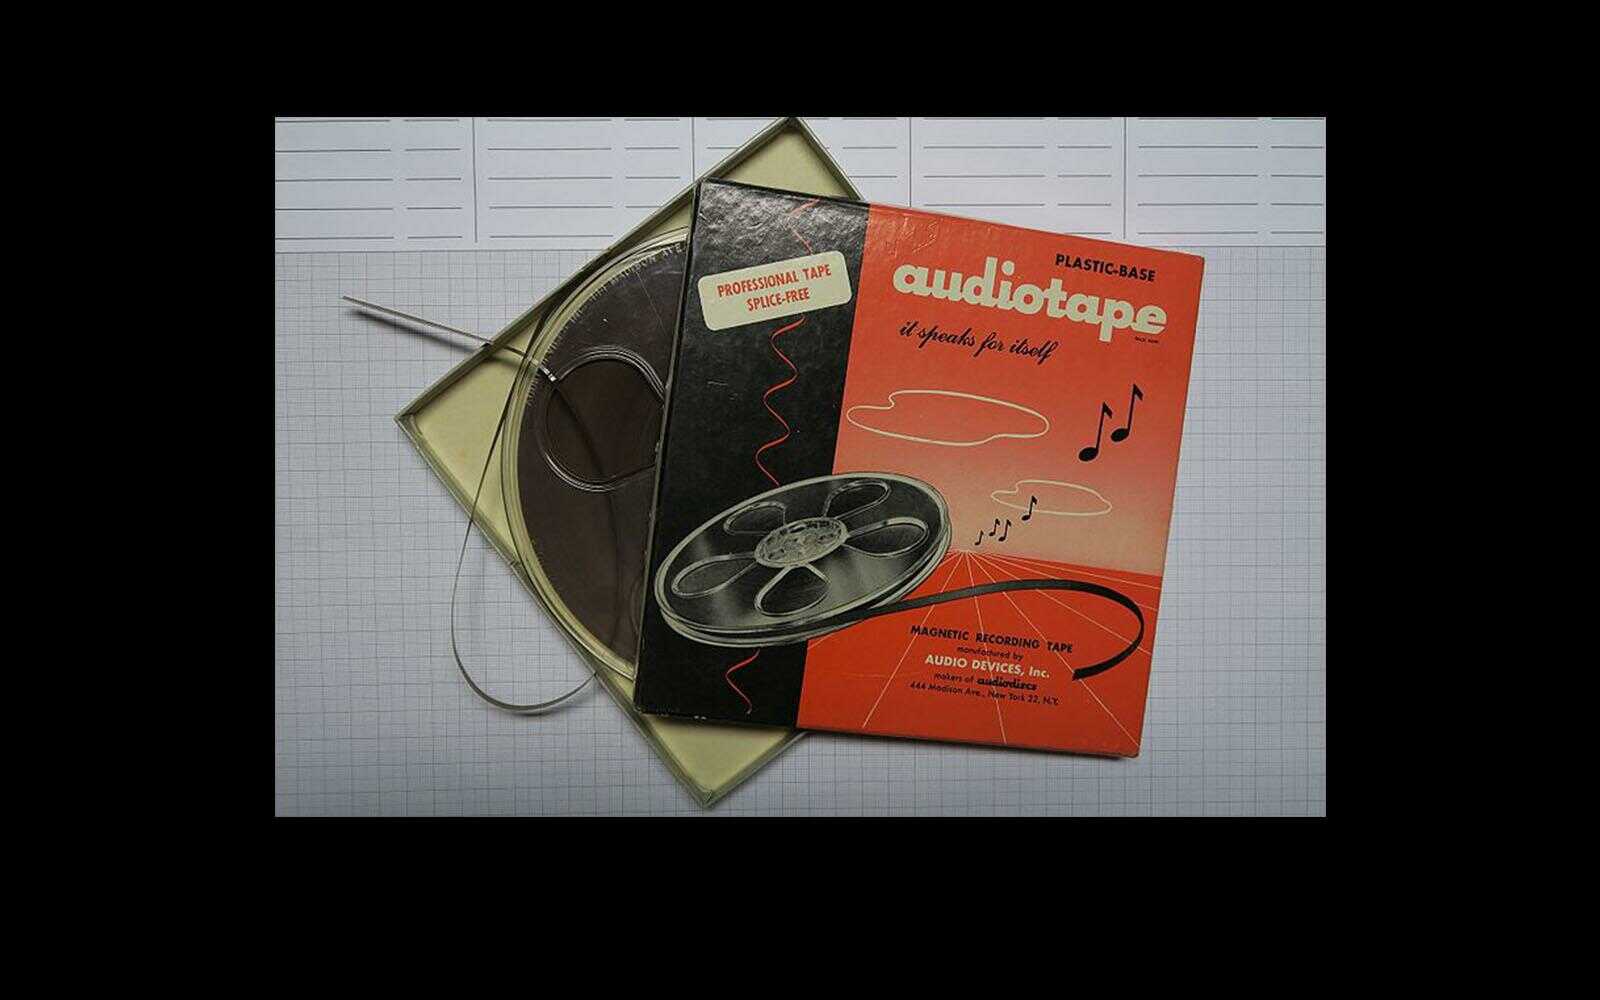 "magnetic recording tape" - Magnetband für Tonaufnahmen, 1959 © Wikimedia Commons